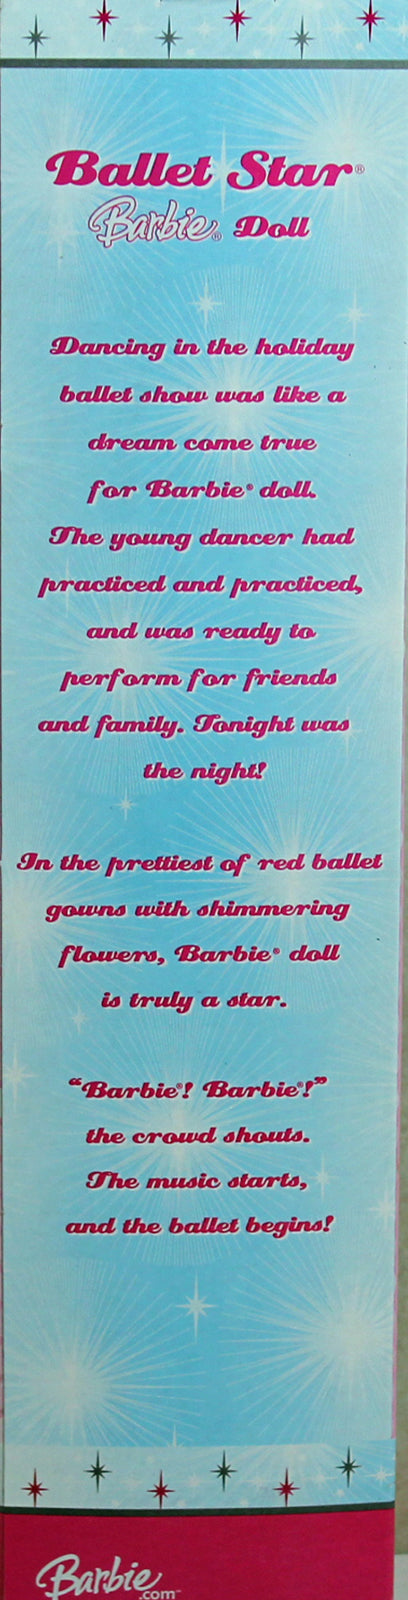 2006 Ballet Star Barbie (39700)